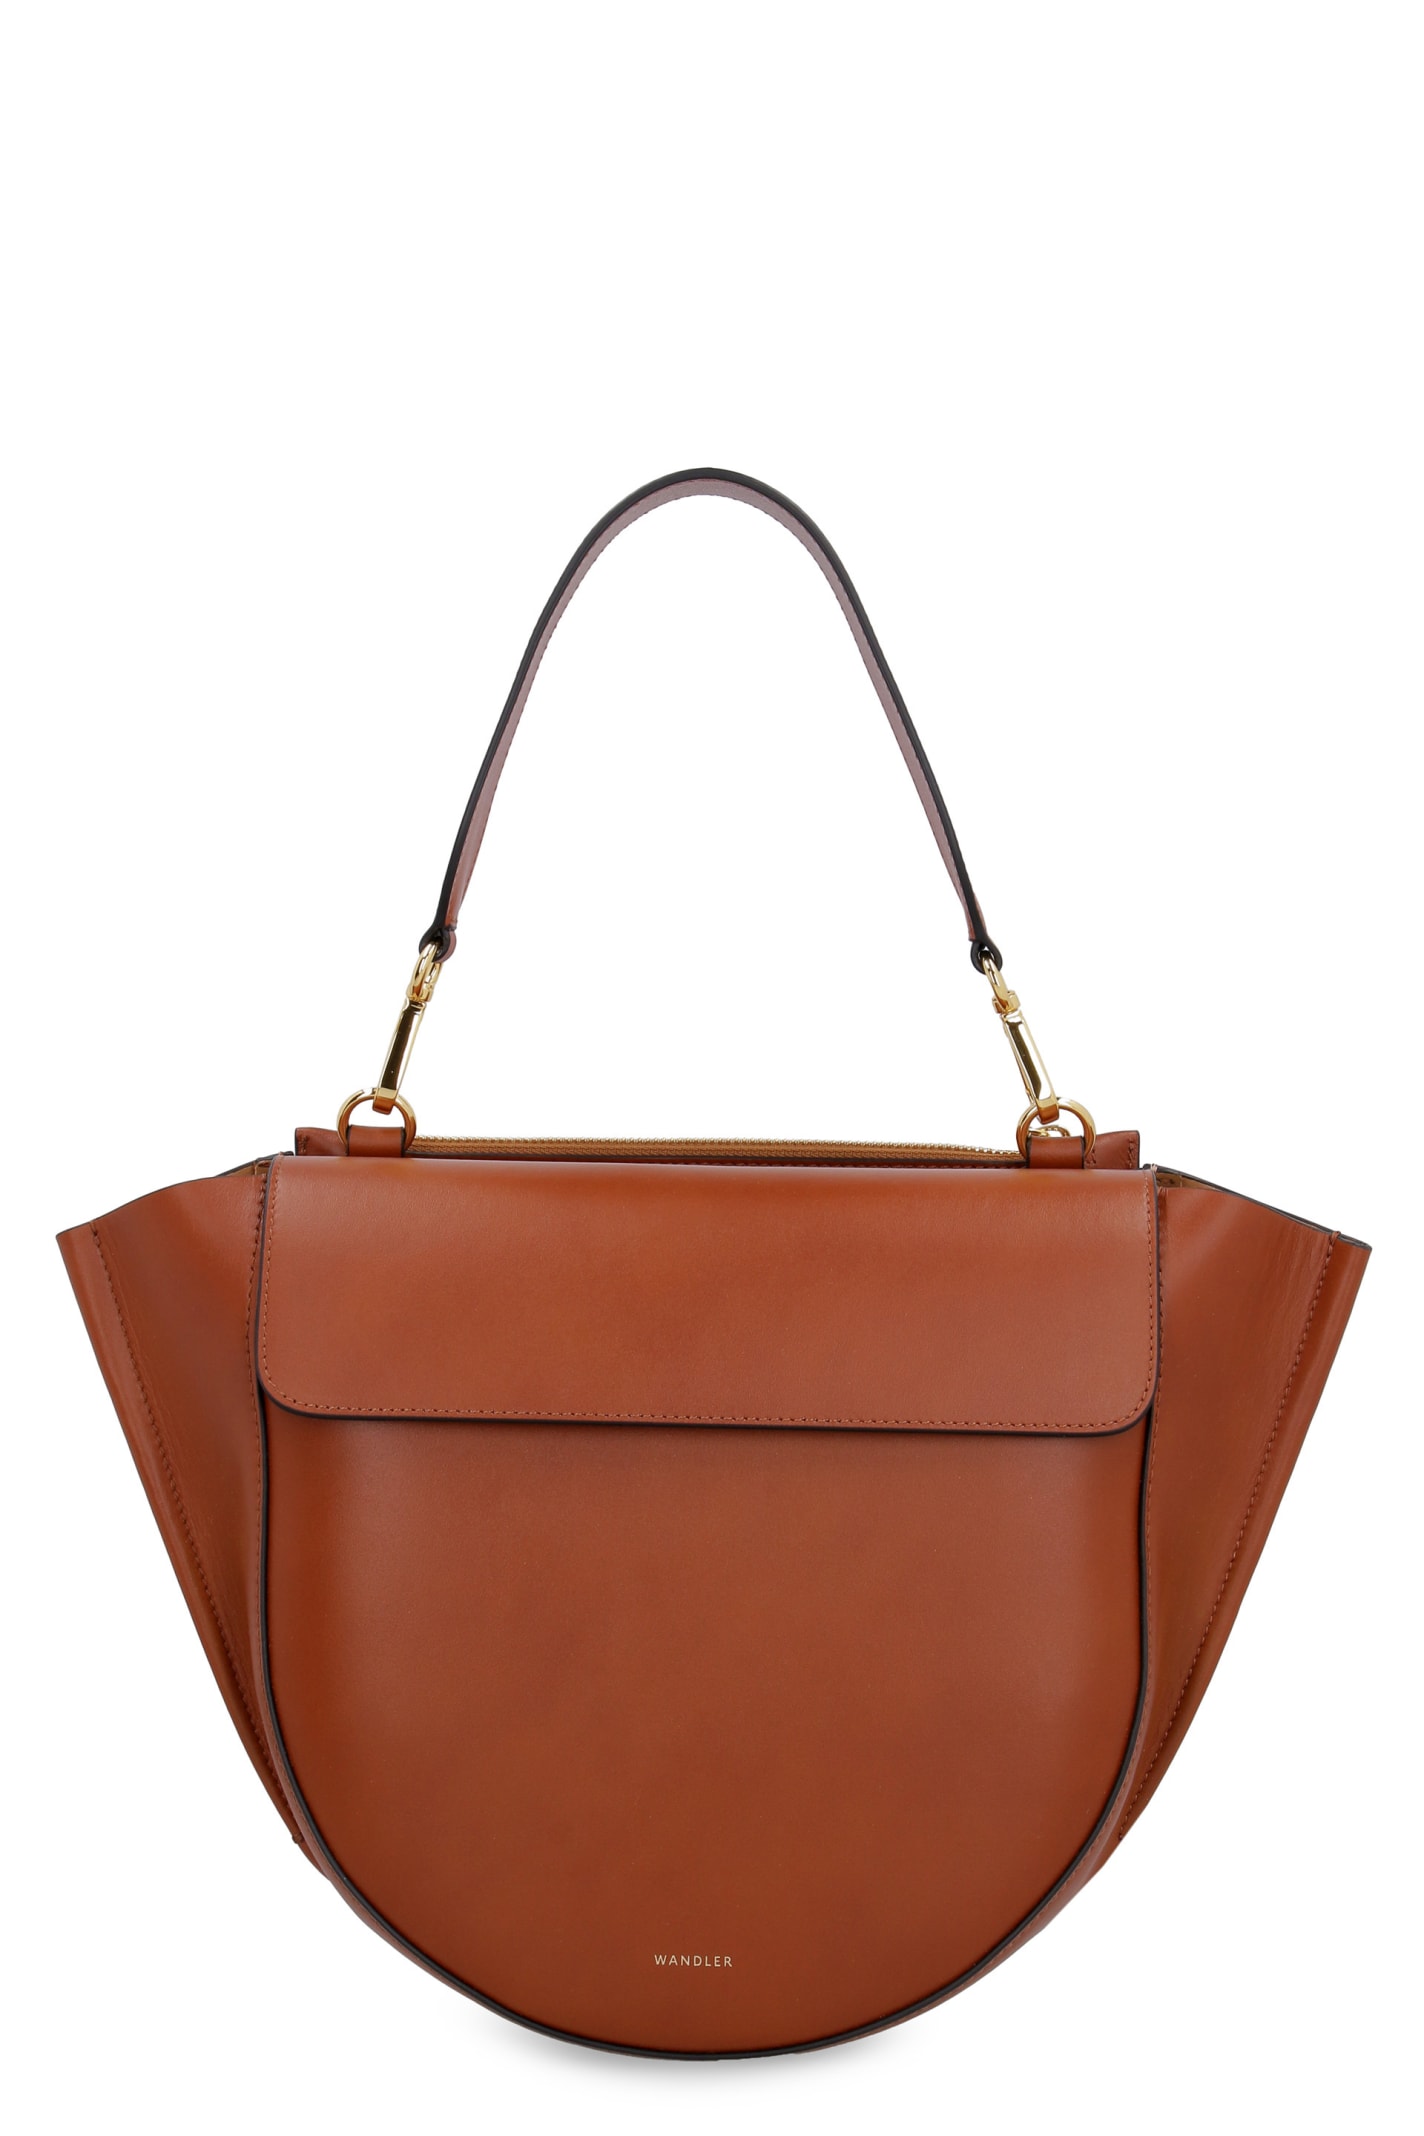 Wandler Hortensia Leather Bag